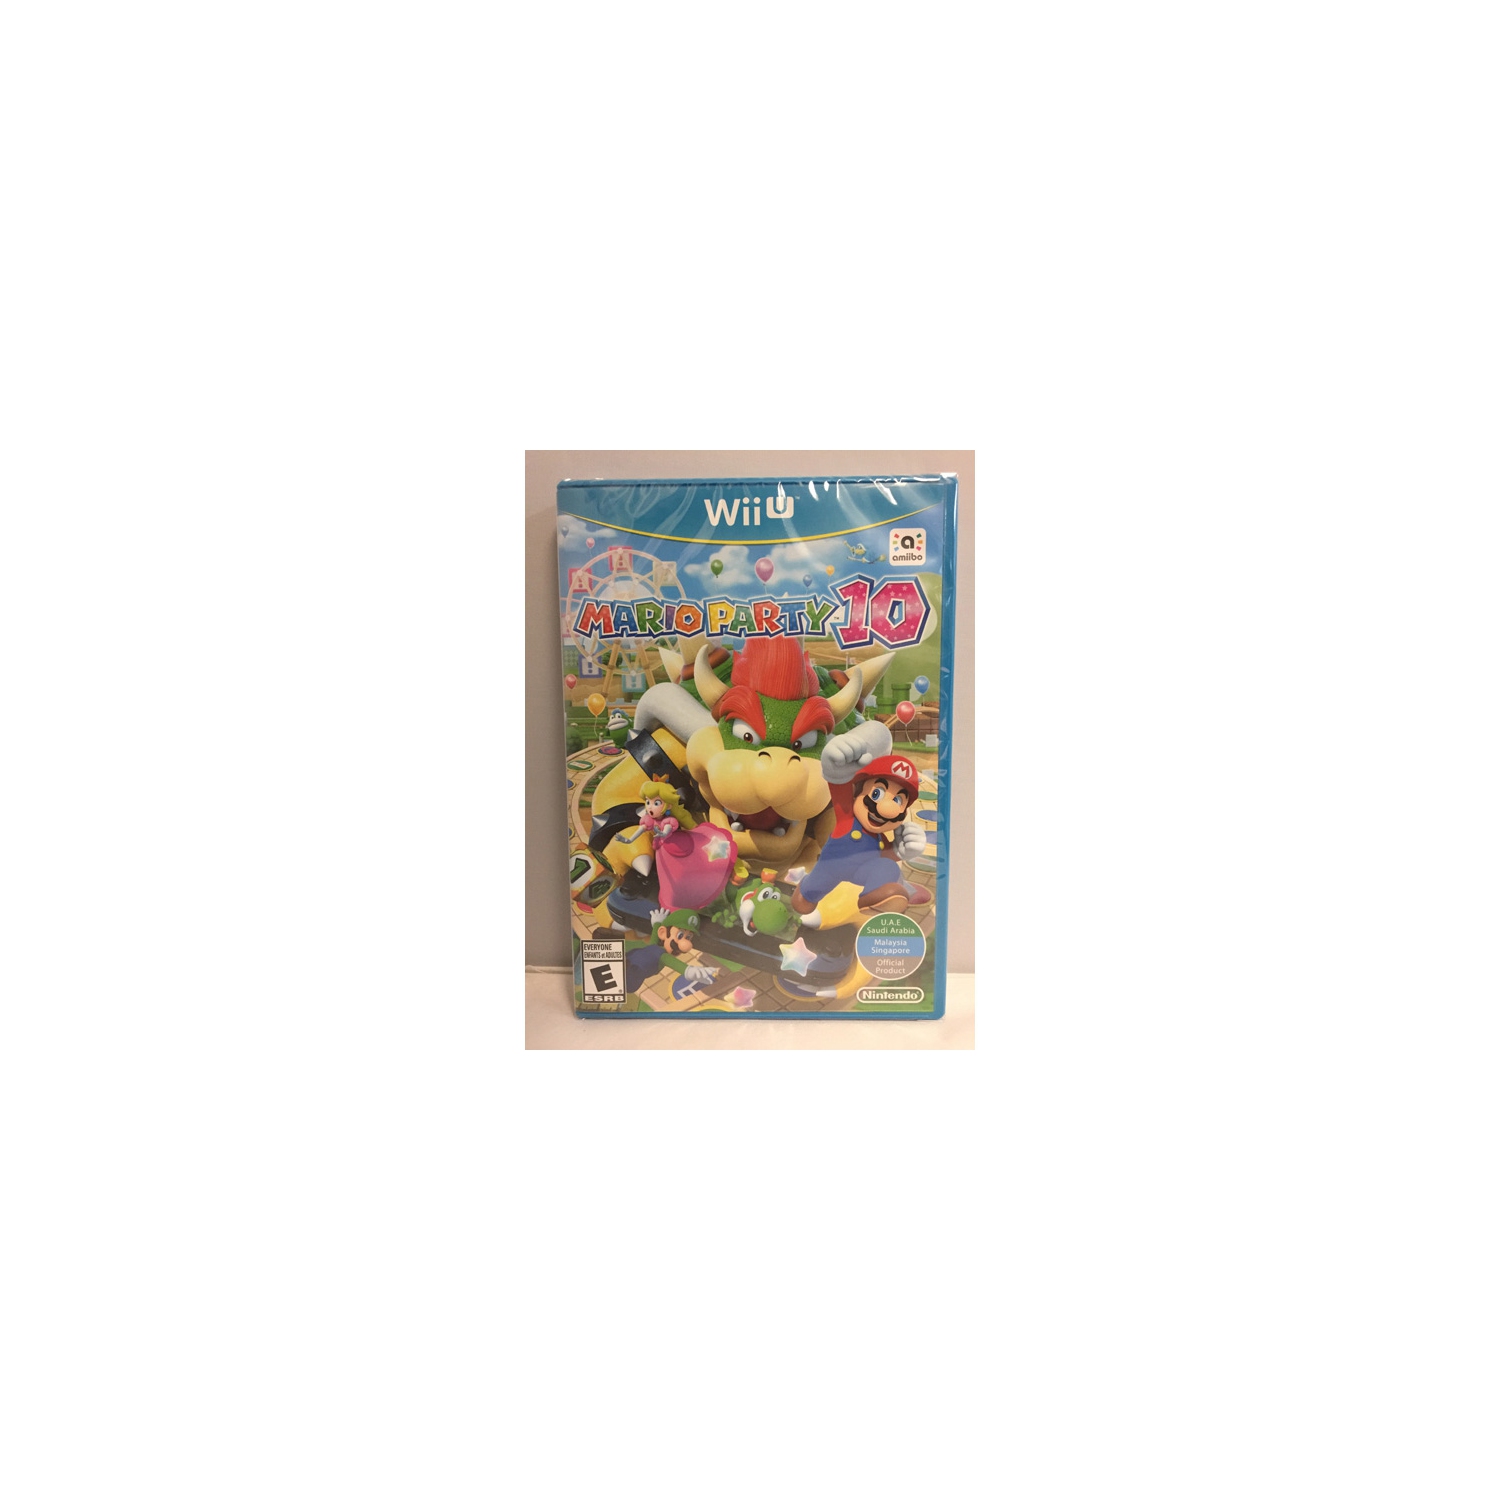 Mario Party 10 (Uae) (Wii U)